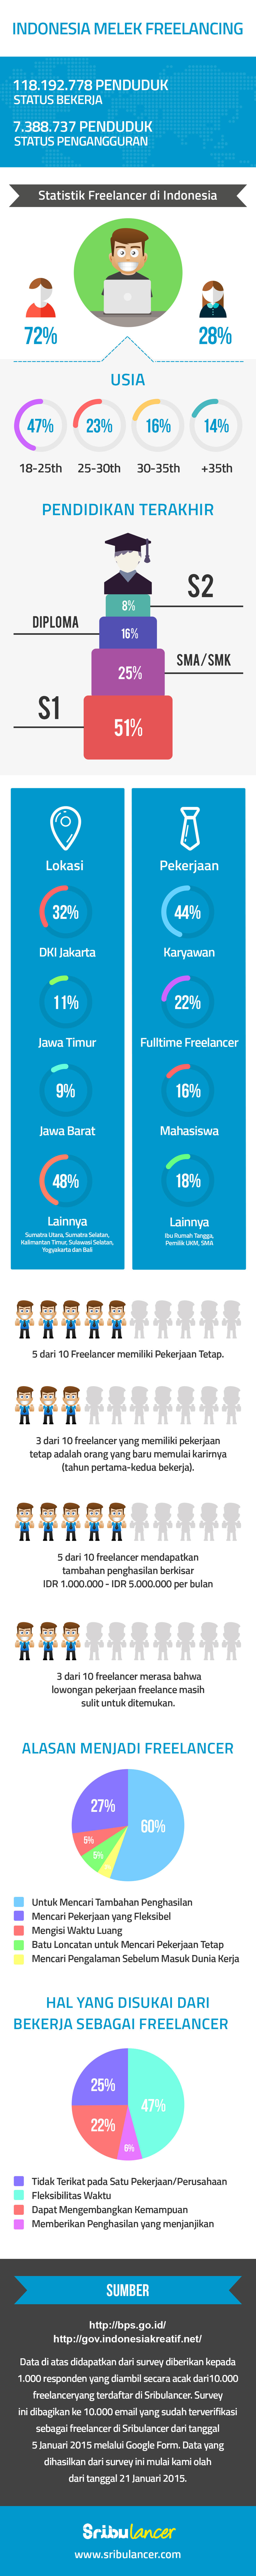 infographics_ID(1)